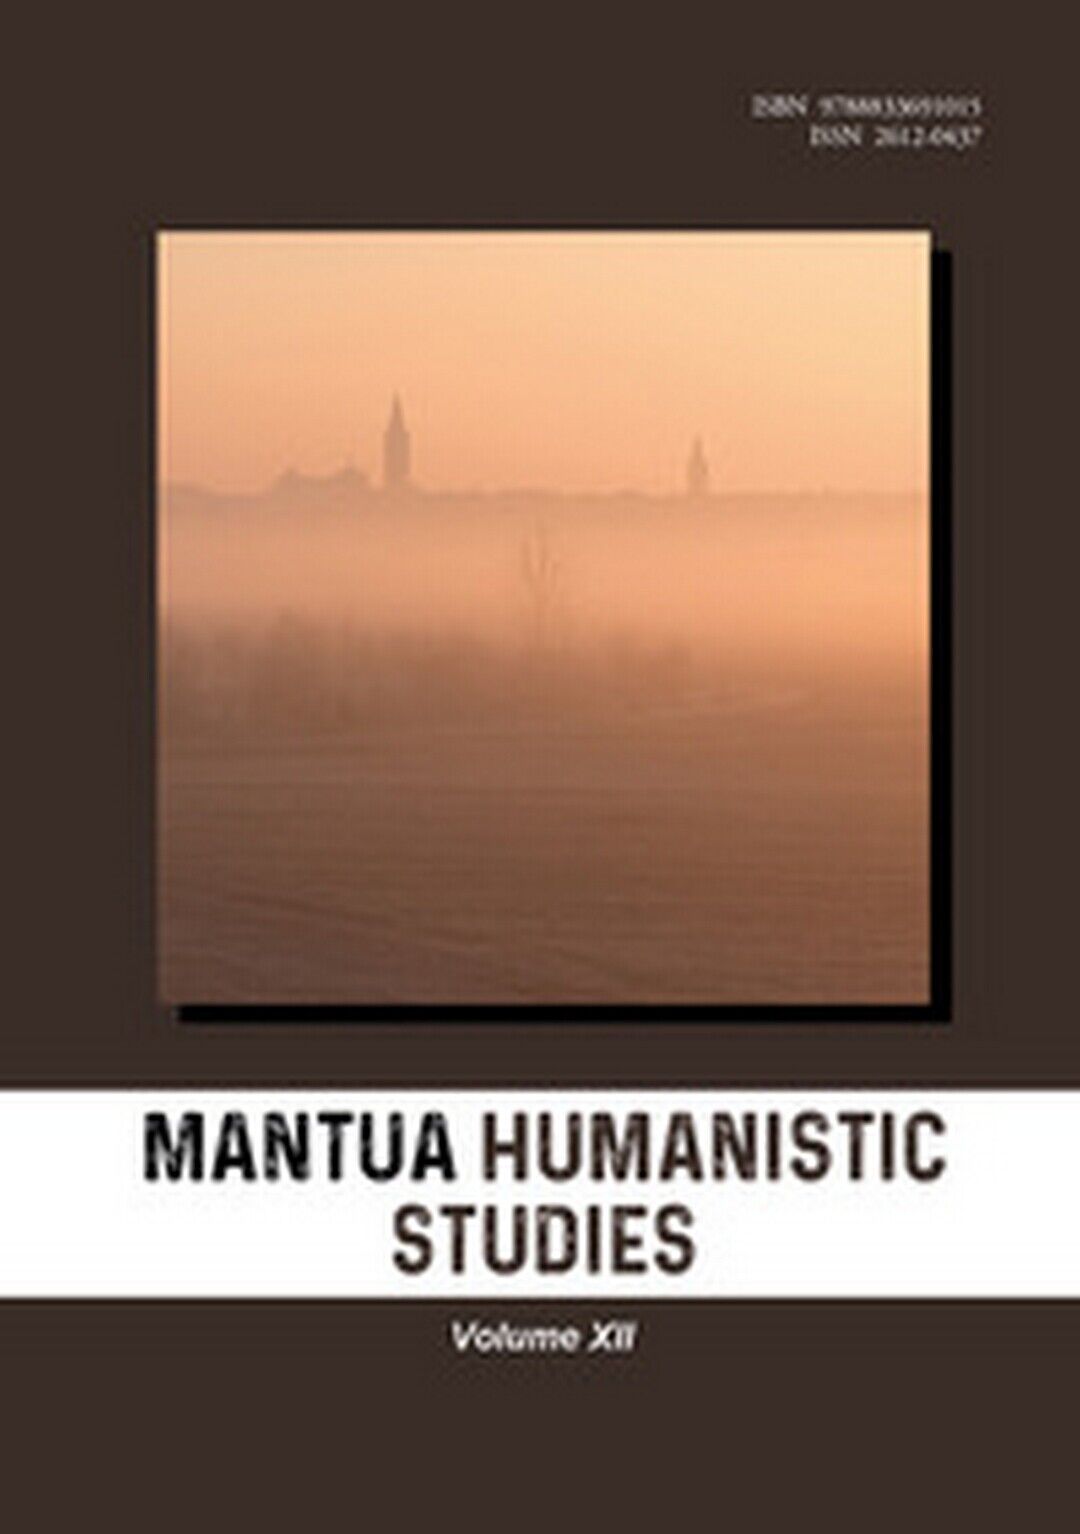 Mantua humanistic studies Vol.12  di R. Roni,  2019,  Youcanprint